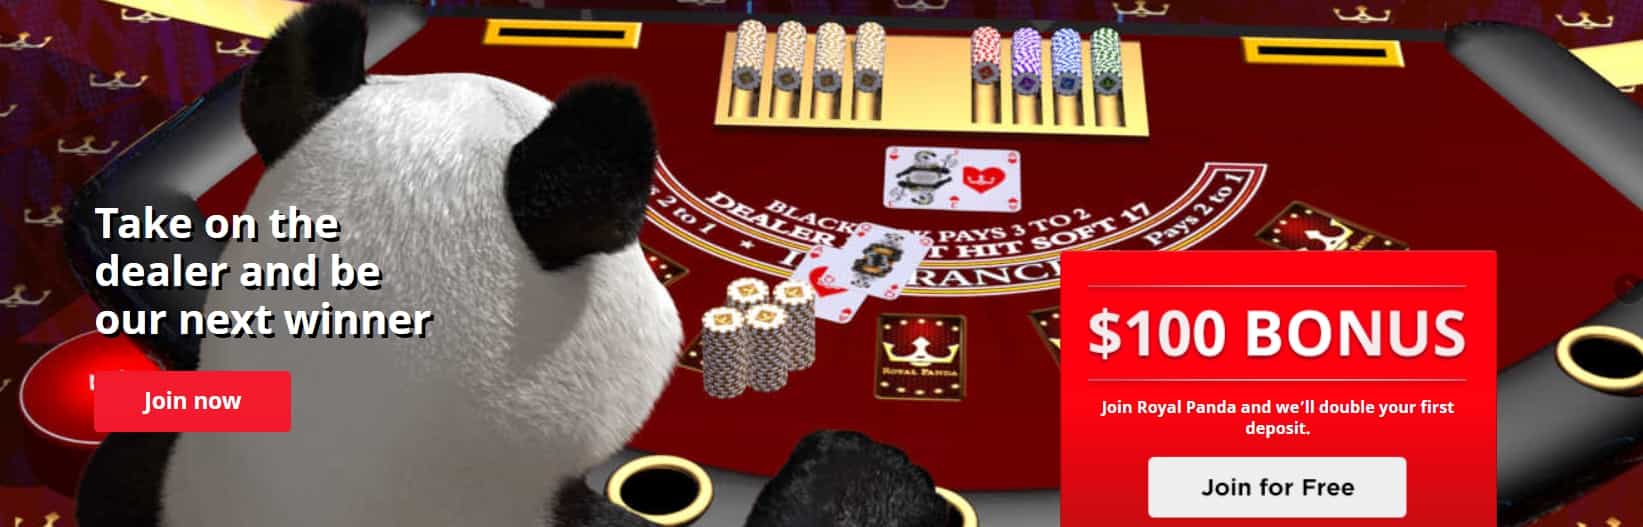 royal panda online casino